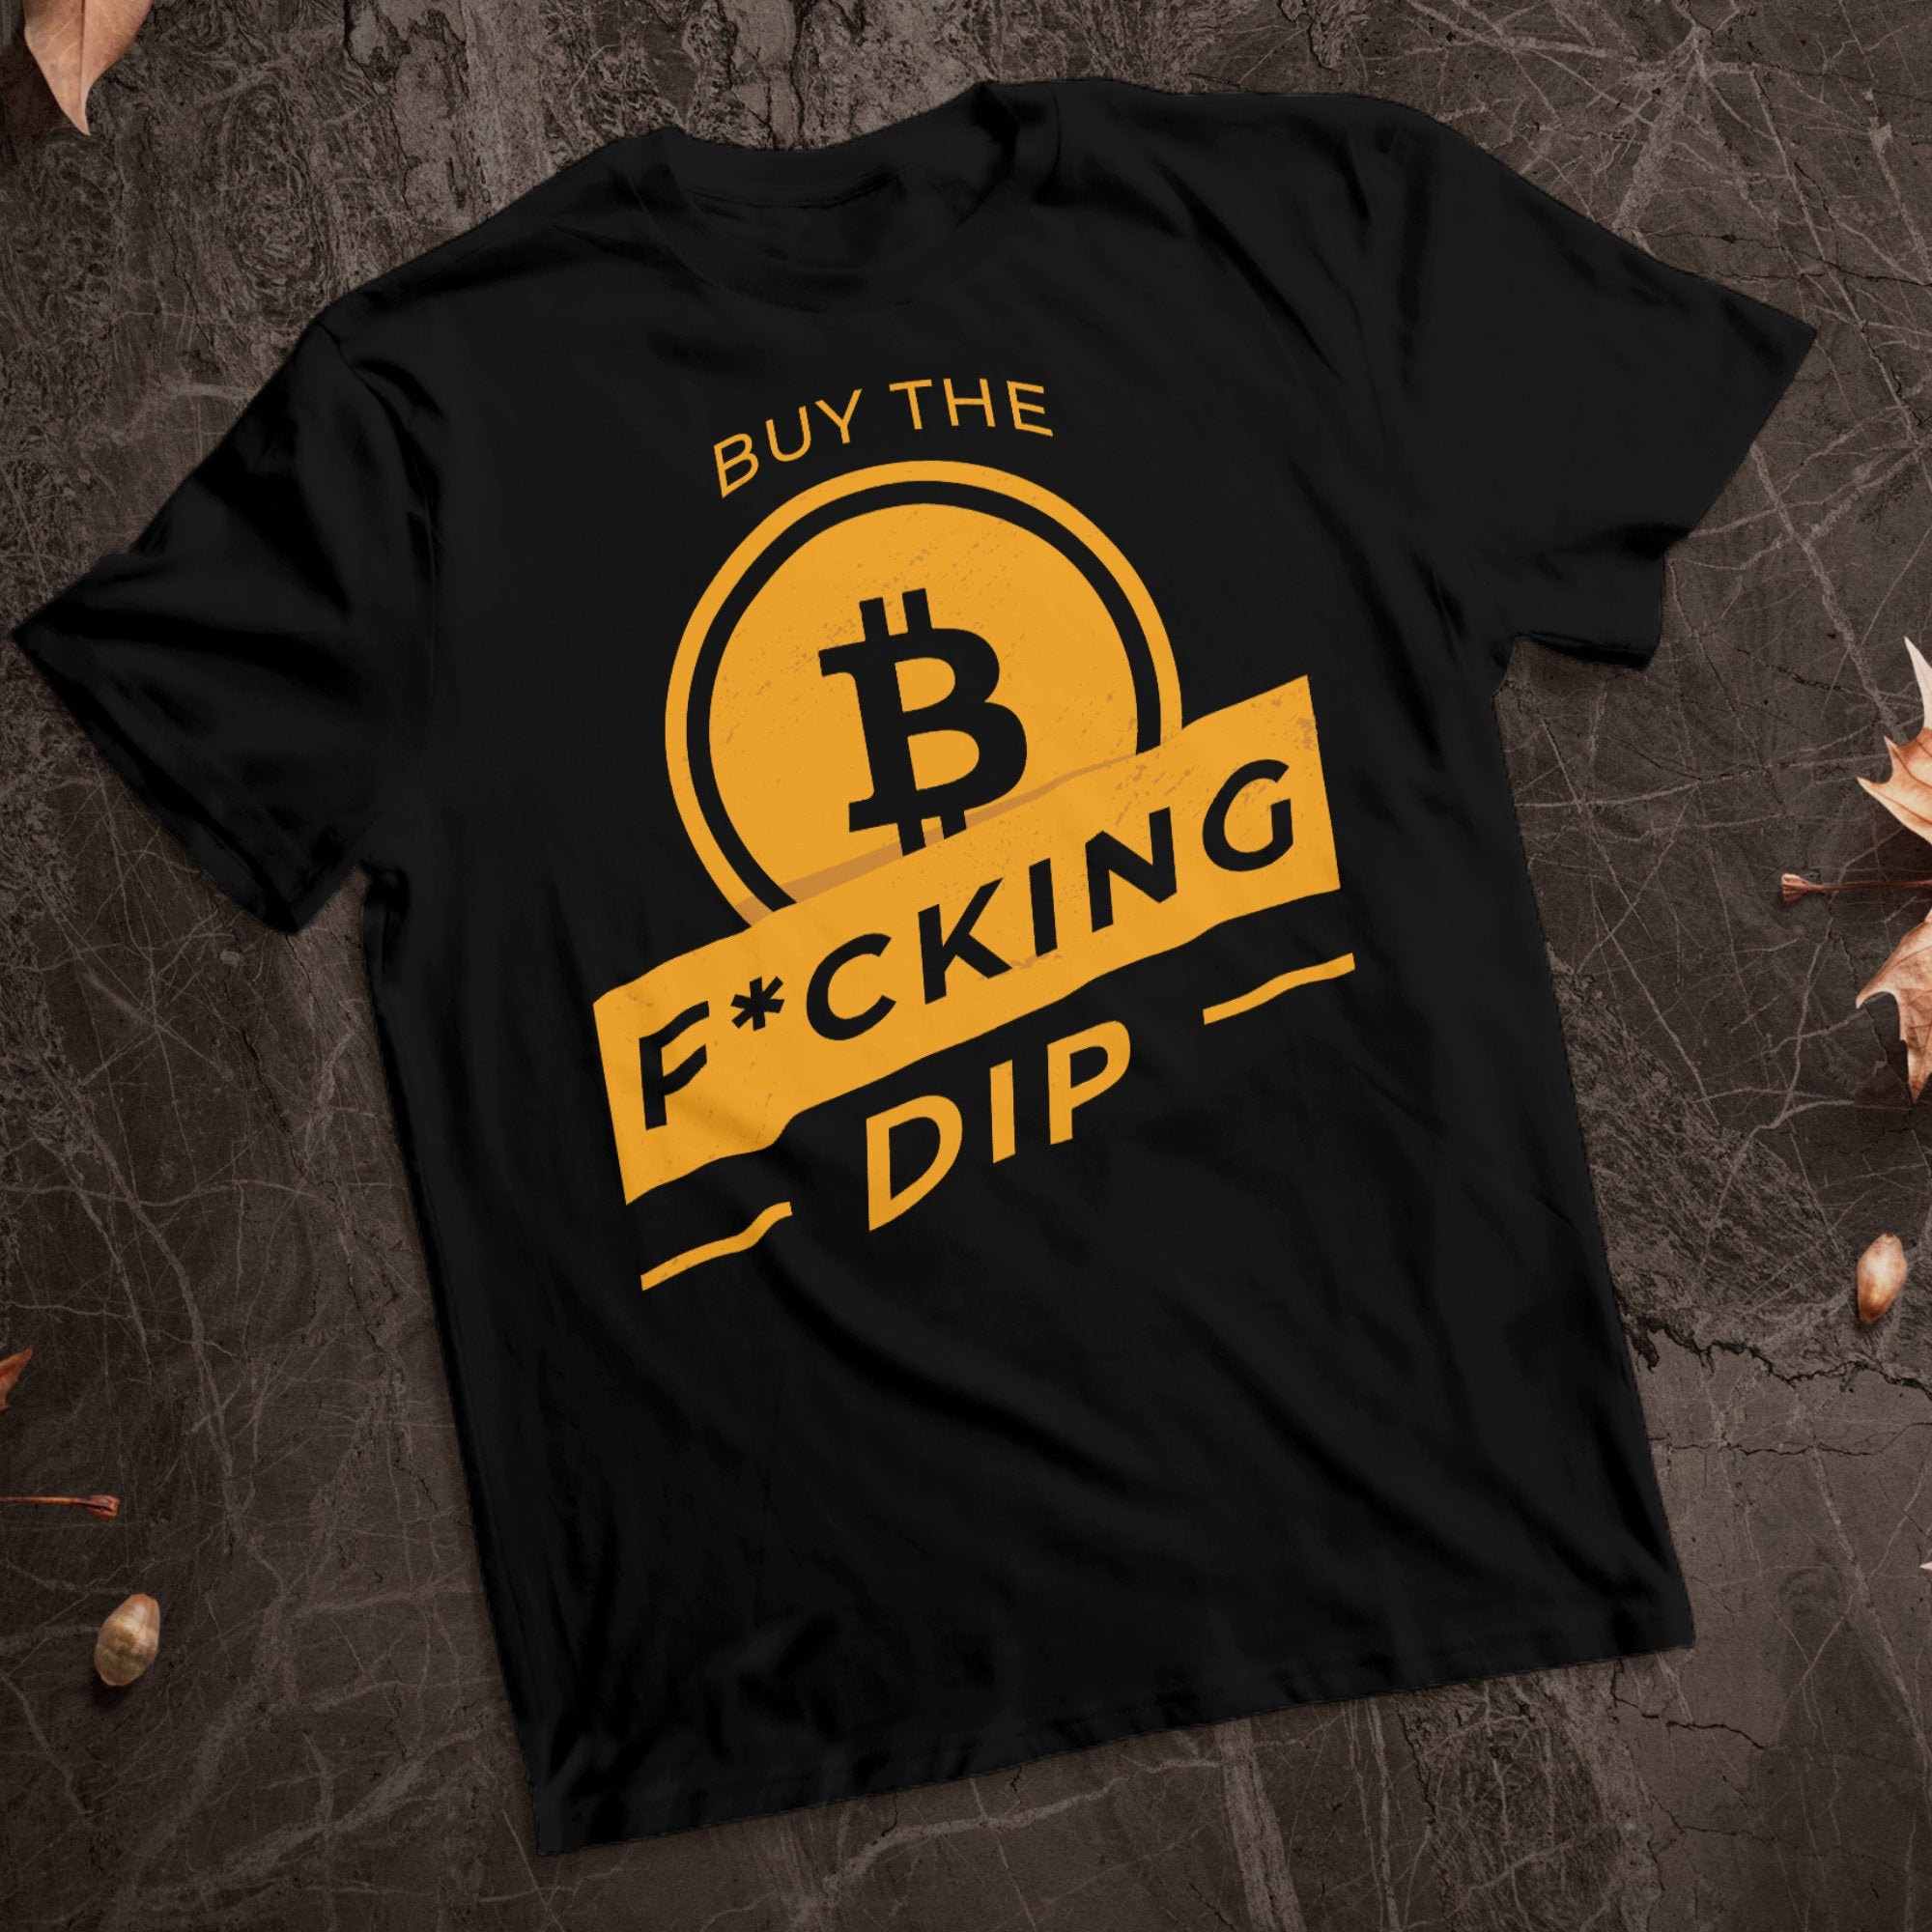 You can buy a fraction of a bitcoin shirt opera gx crypto wallet